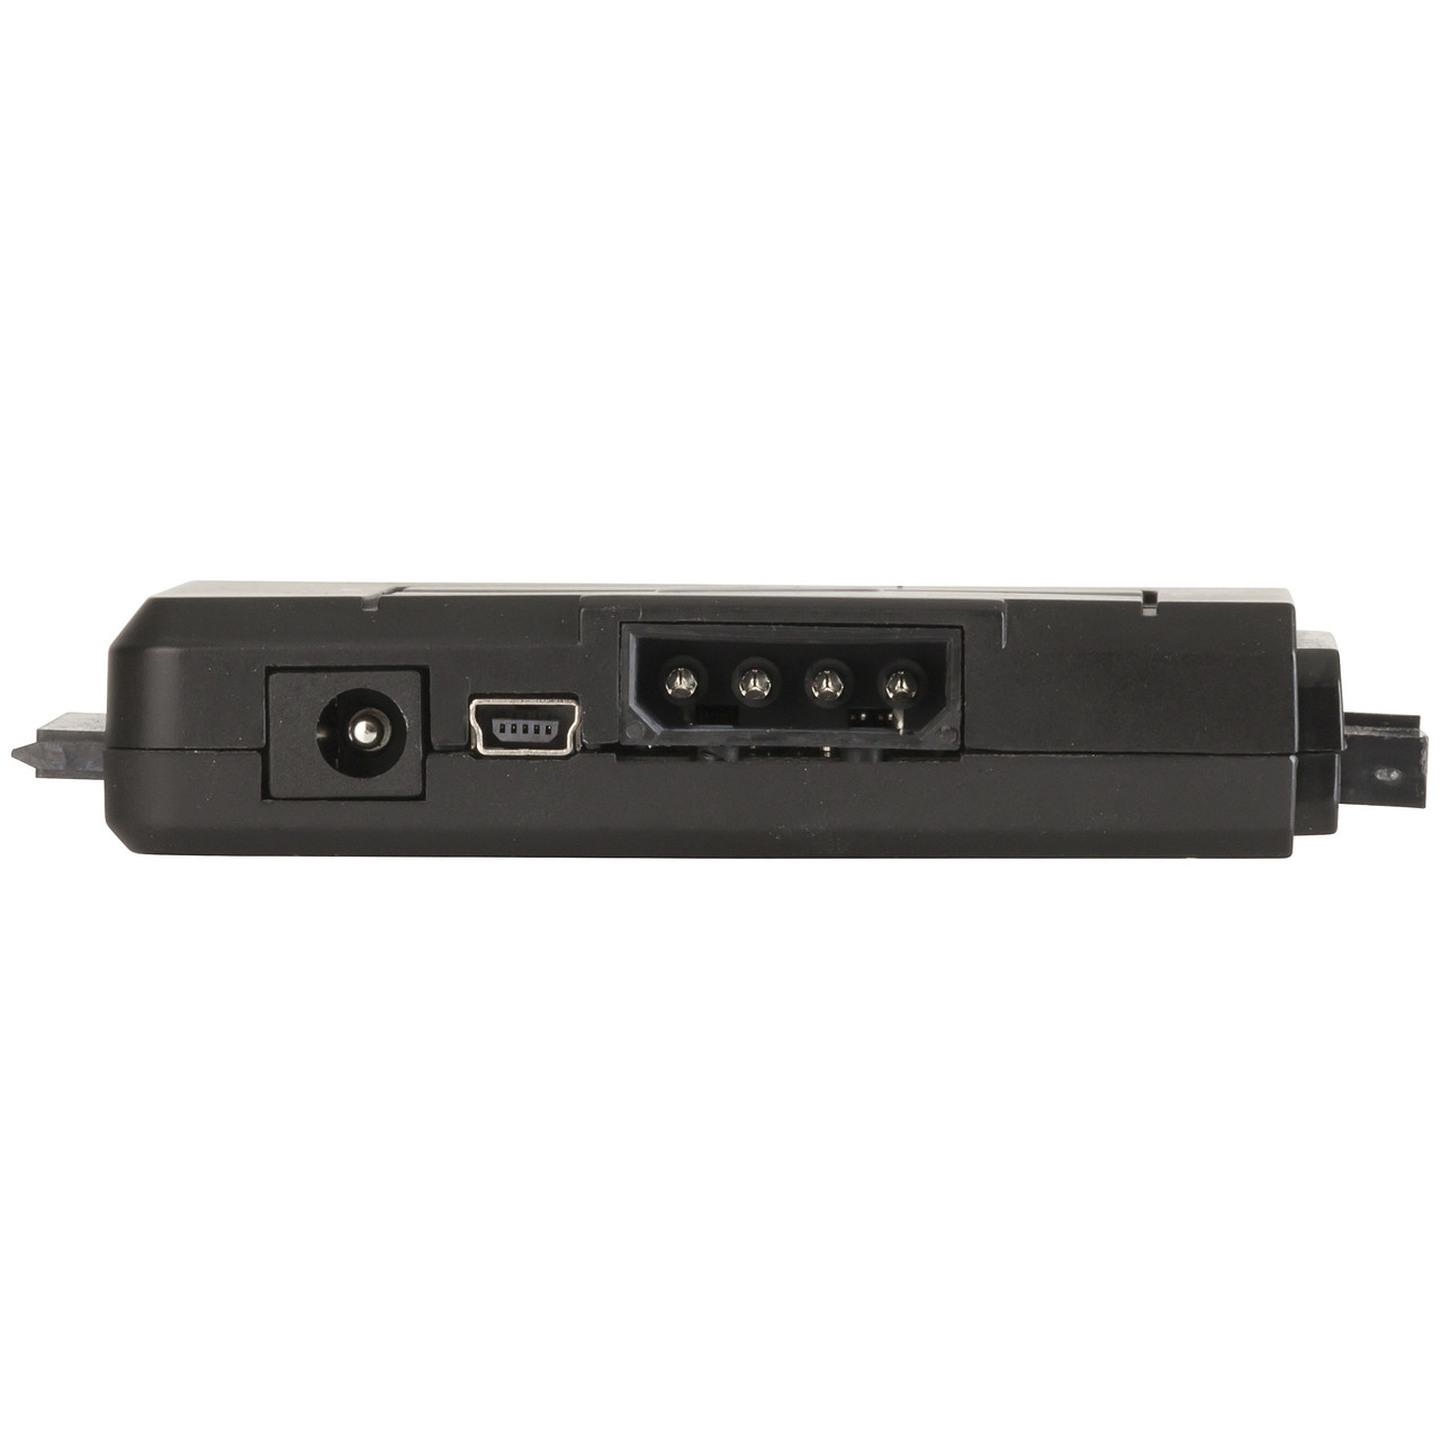 SATA/IDE to USB 2.0 Hard Drive Adaptor